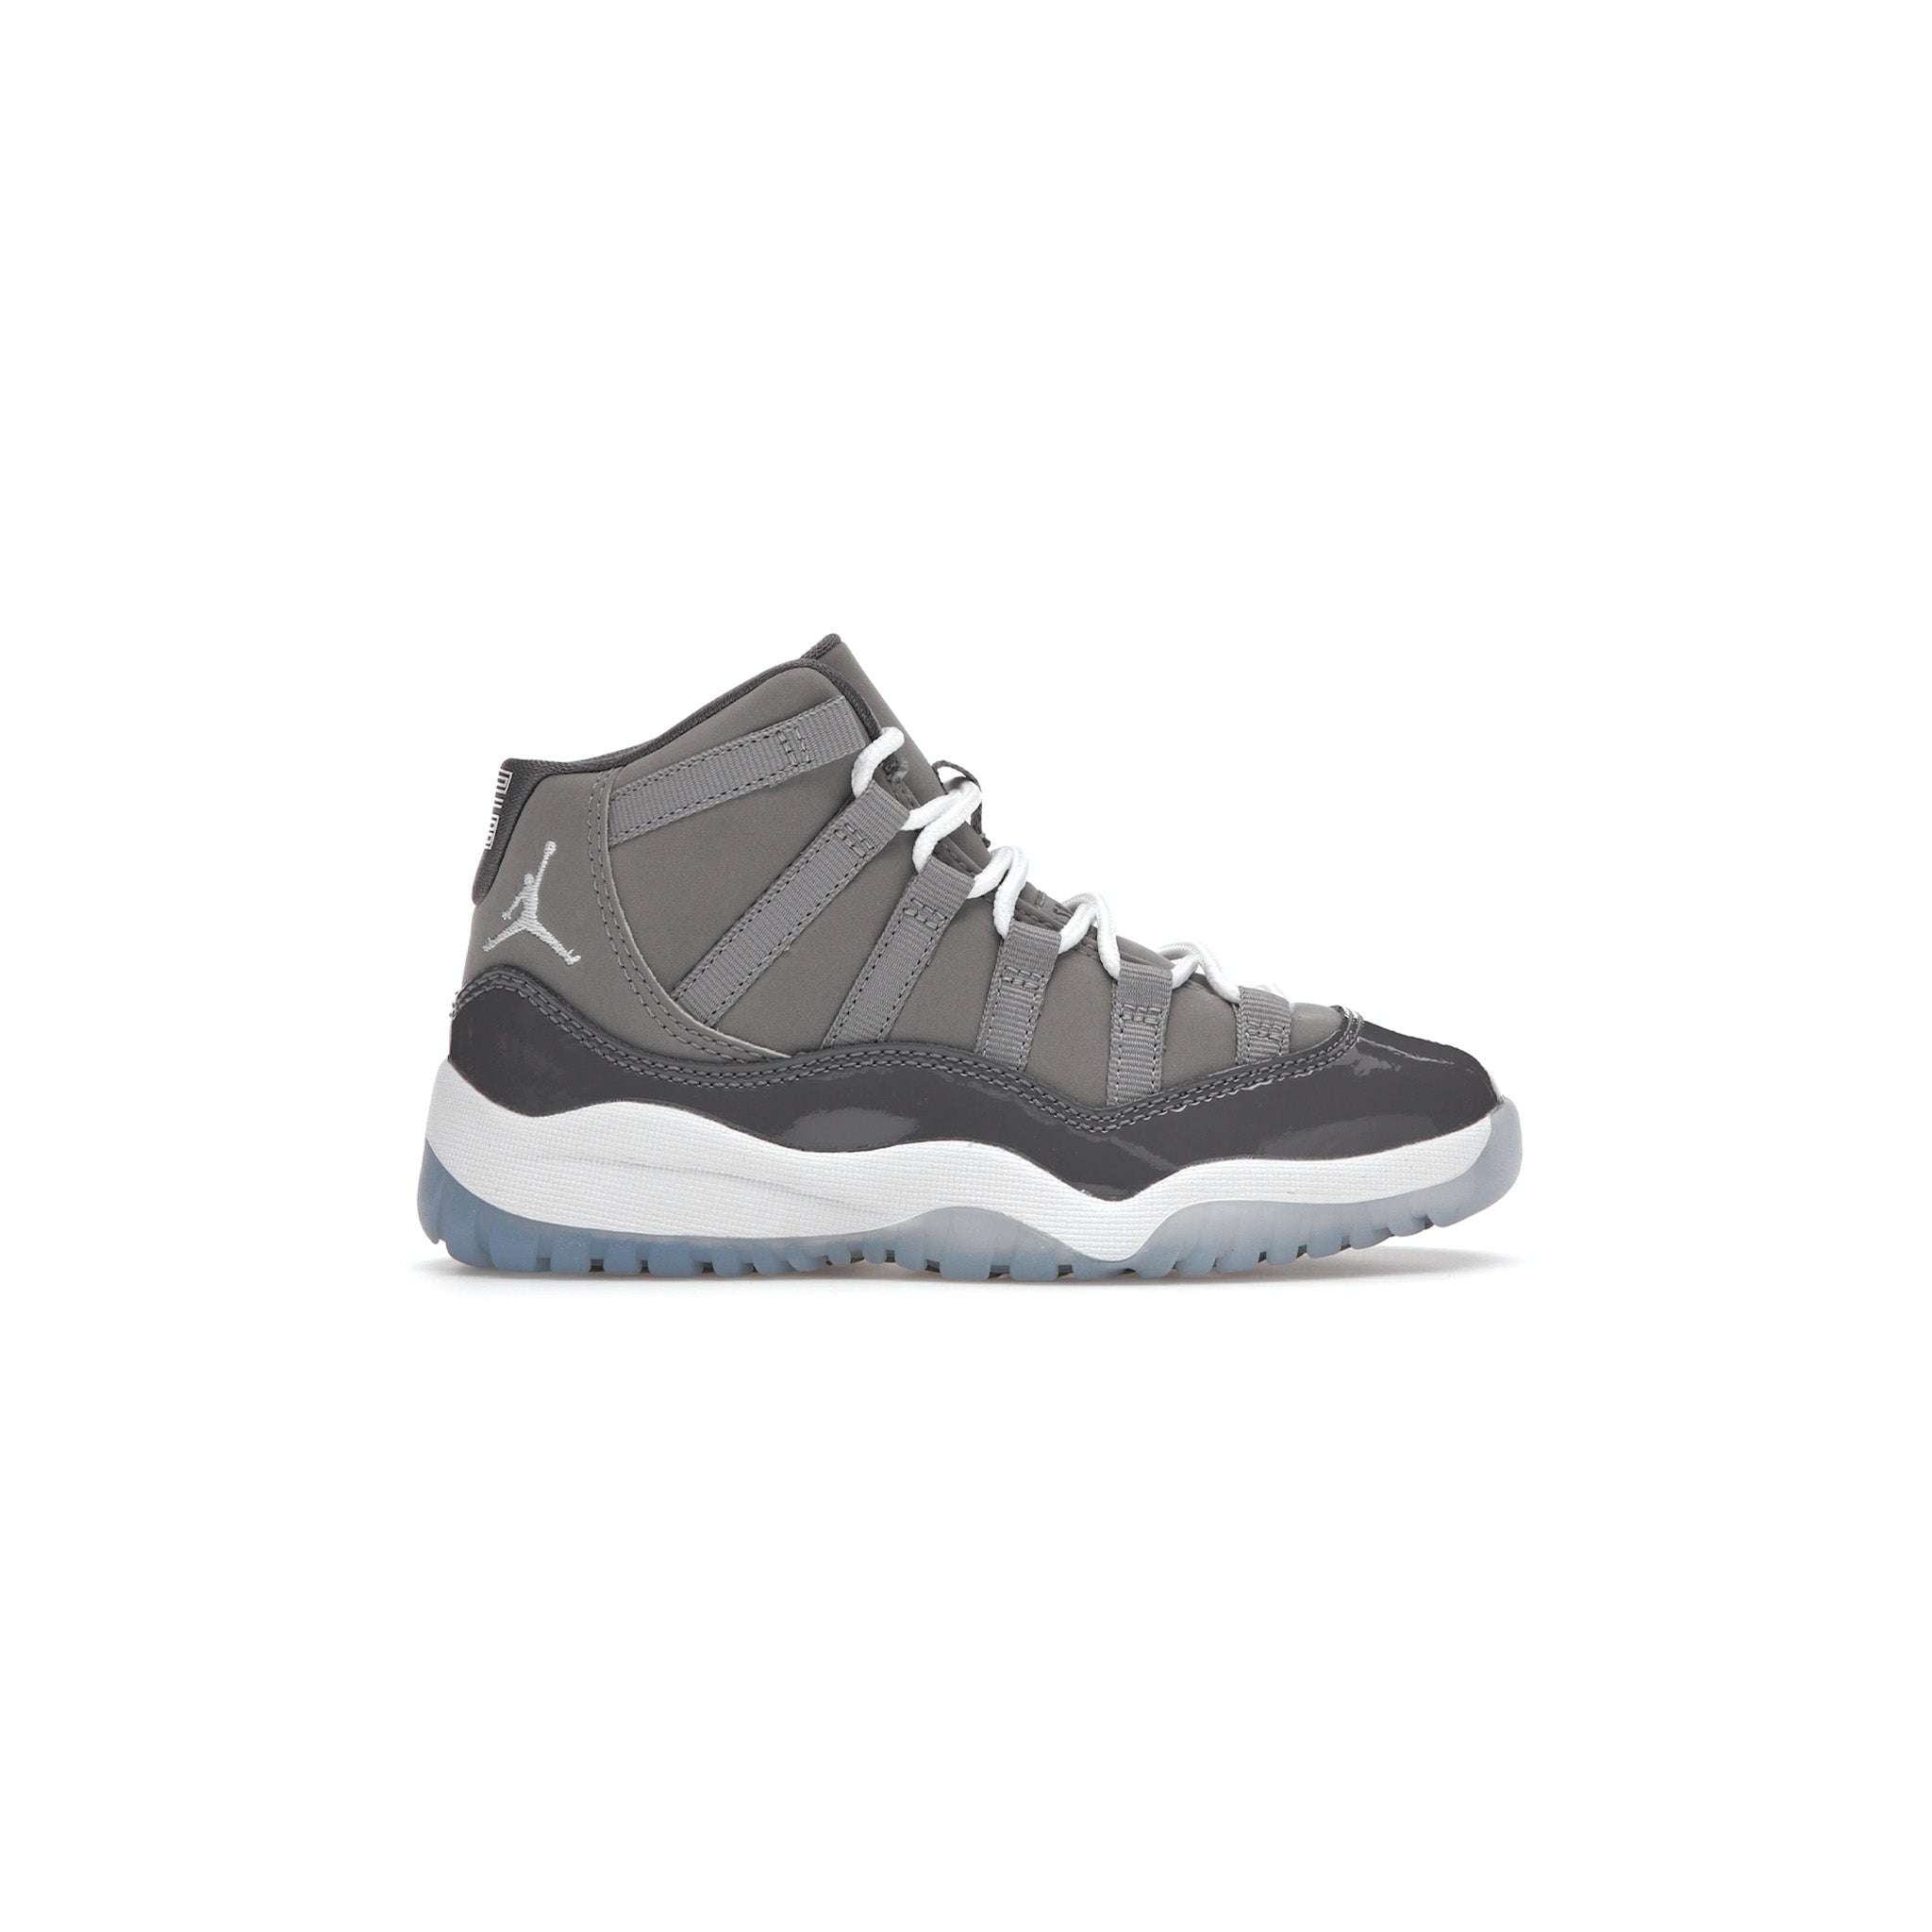 Jordan 11 Retro Cool Grey (2021) (PS)